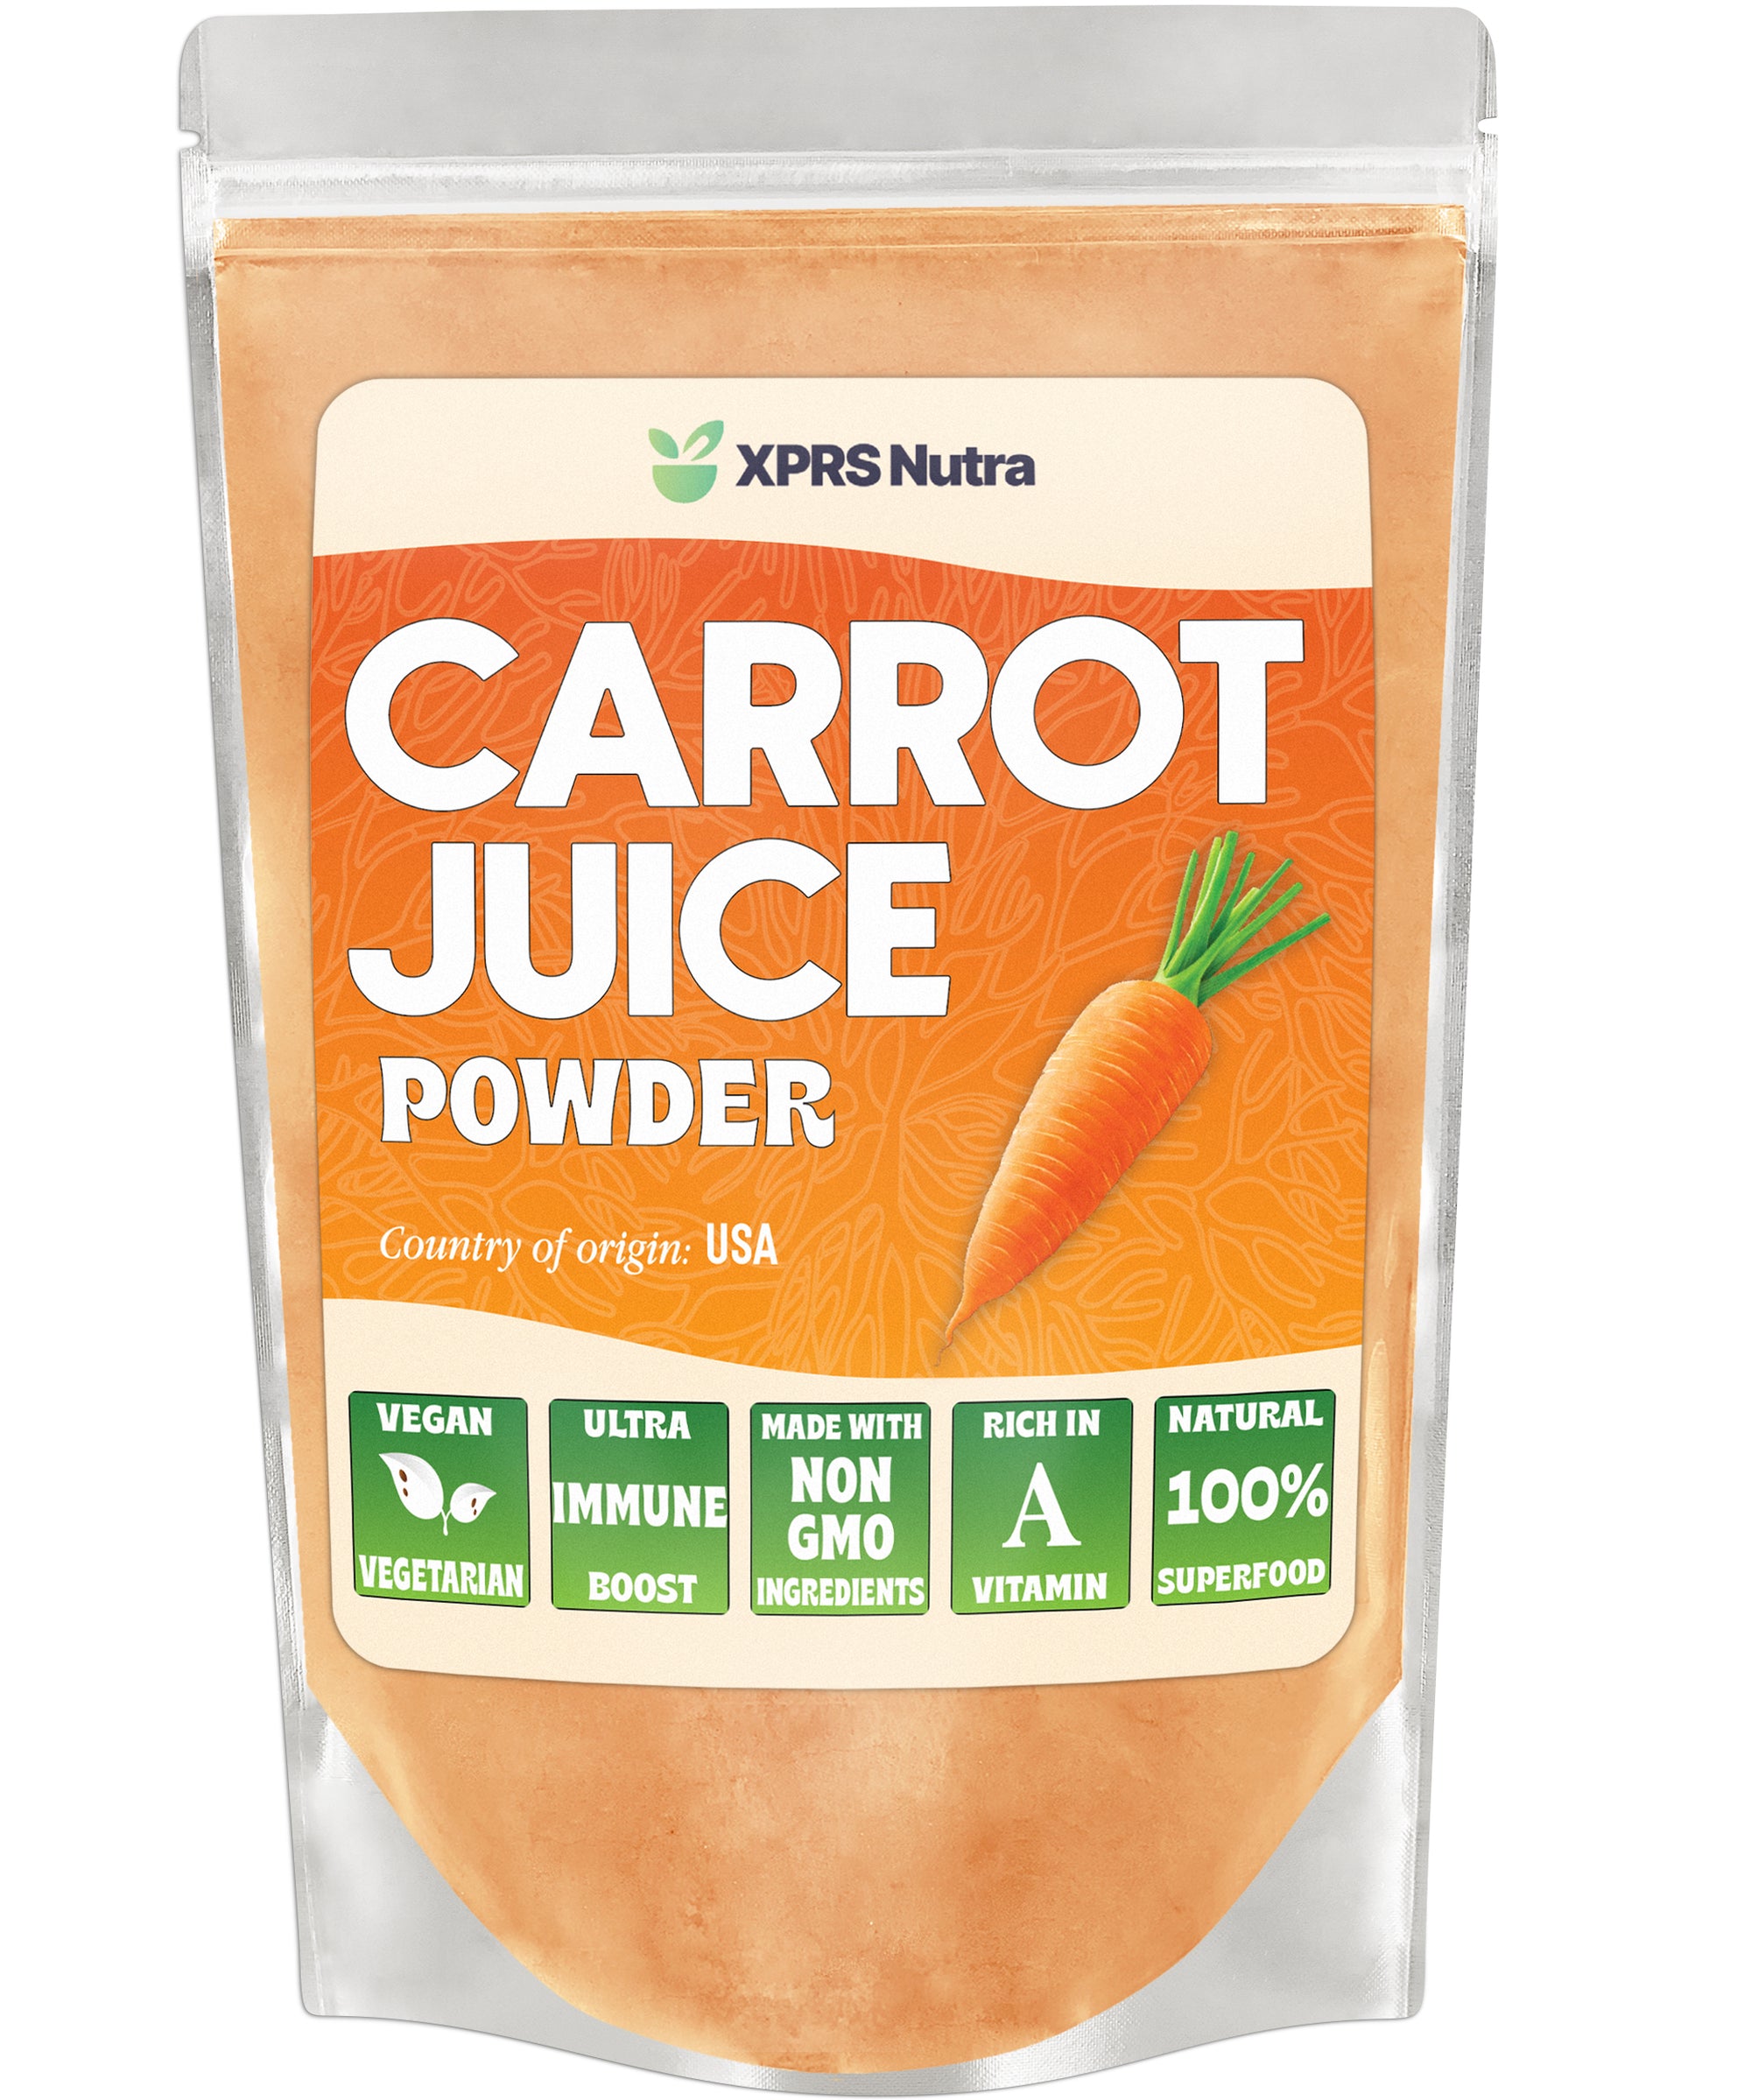 Carrot Juice Powder